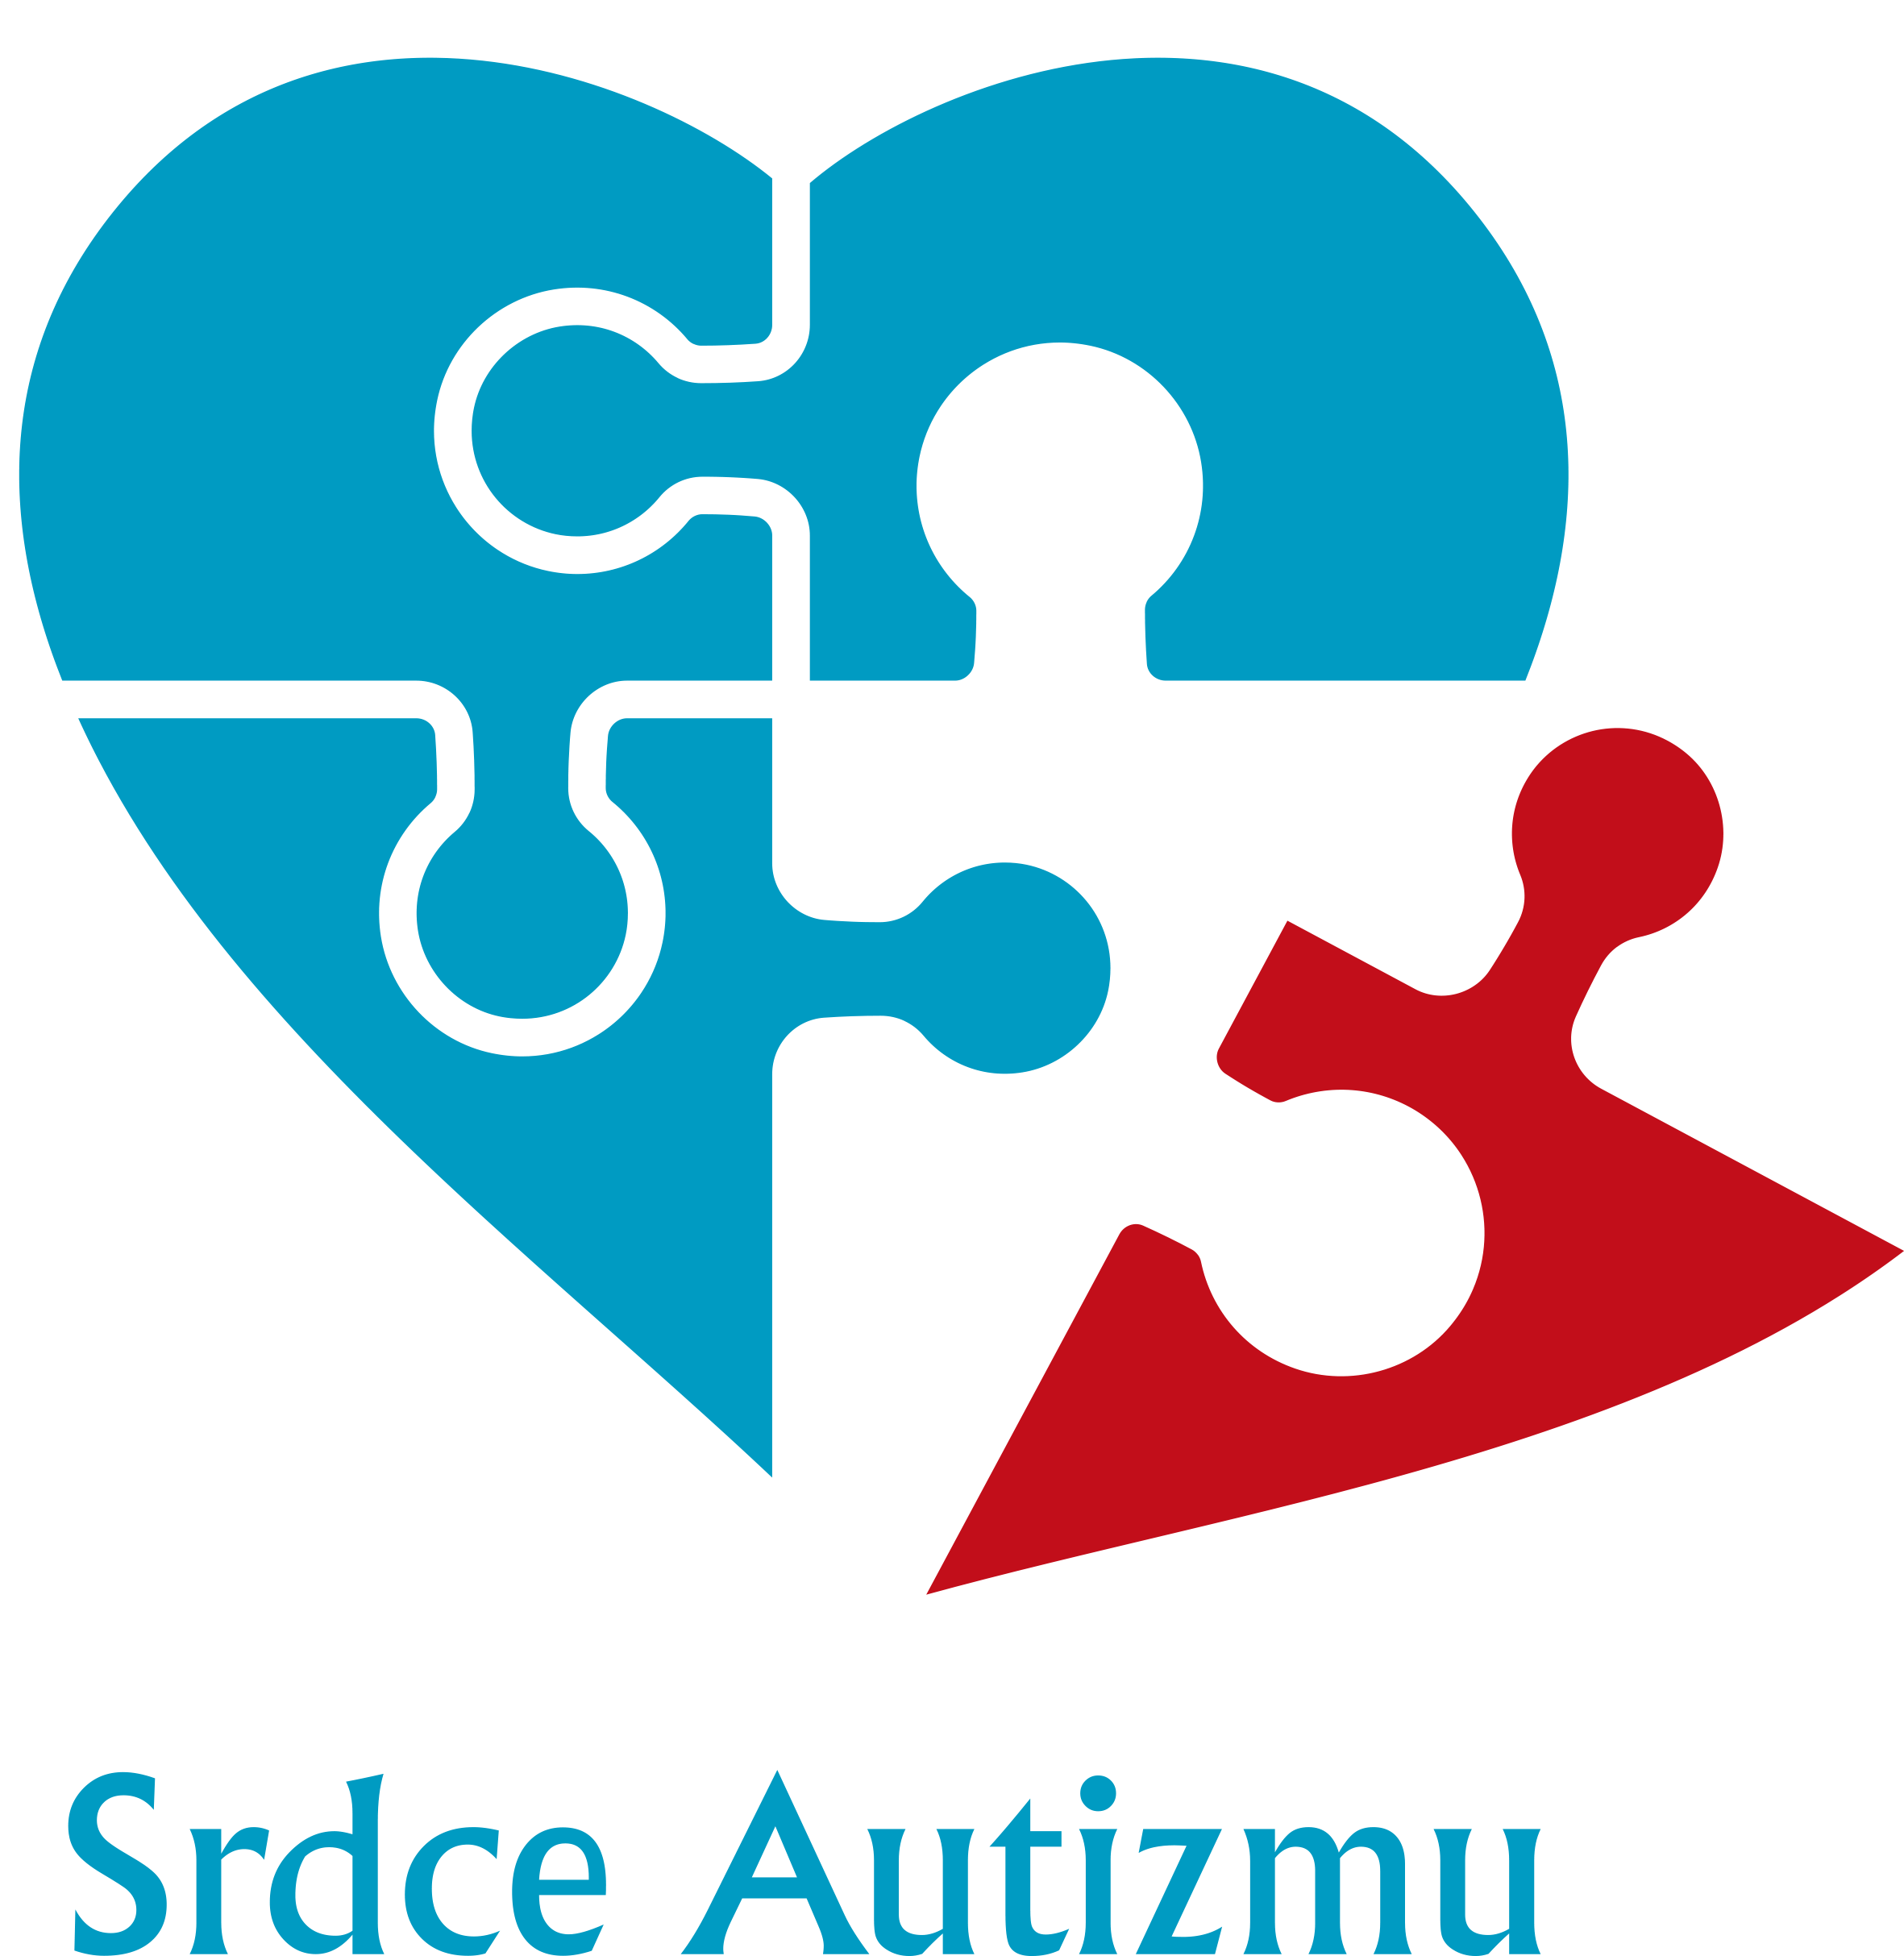 Srdce autizmu – občianske združenie Logo